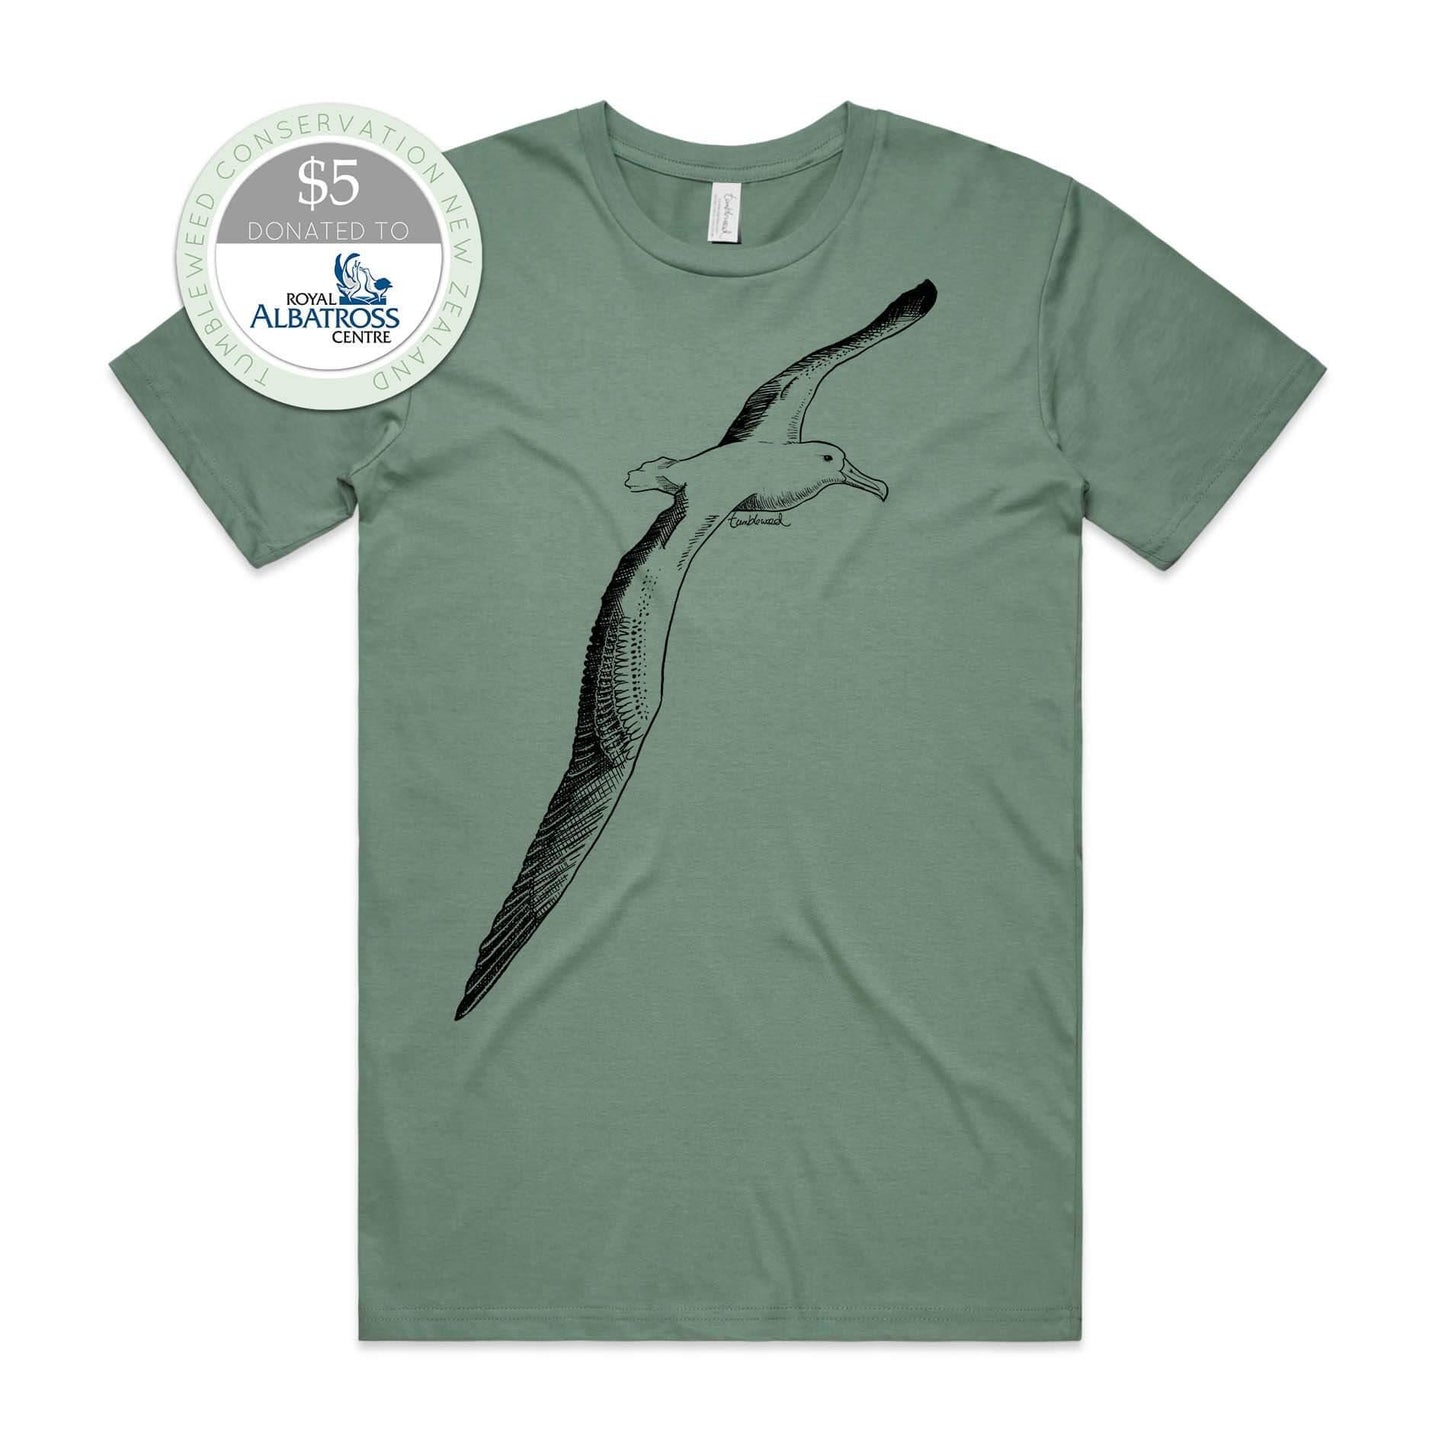 Sage, male t-shirt featuring a screen printed albatross design.